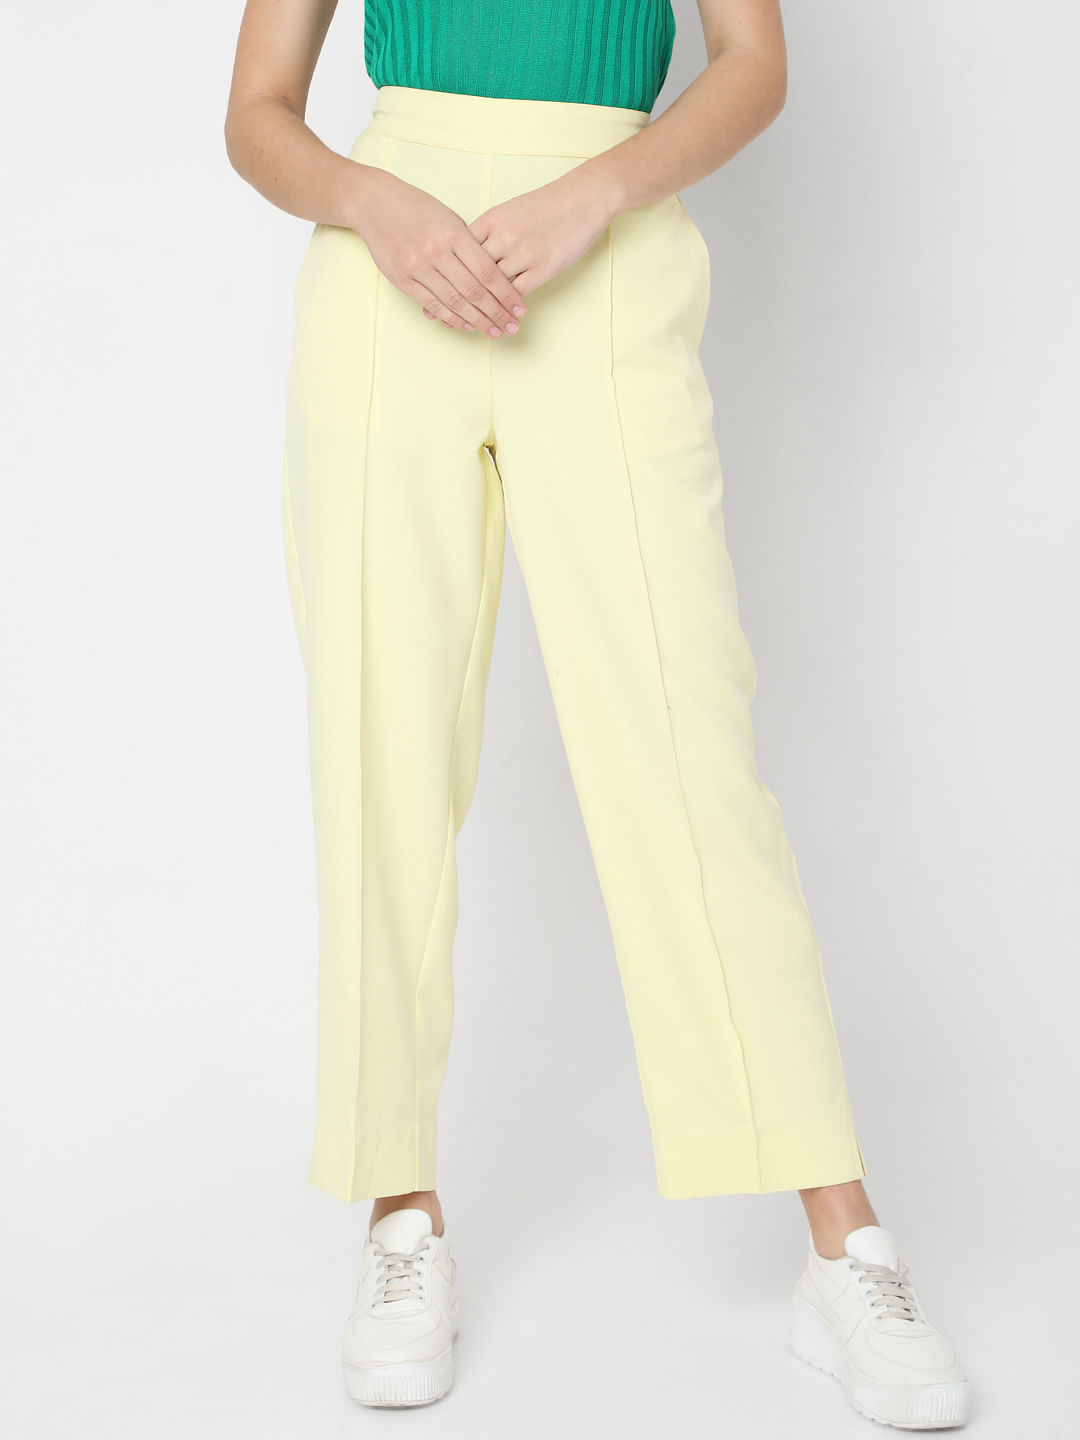 KG FASHION Women Yellow Trousers - Buy KG FASHION Women Yellow Trousers  Online at Best Prices in India | Flipkart.com